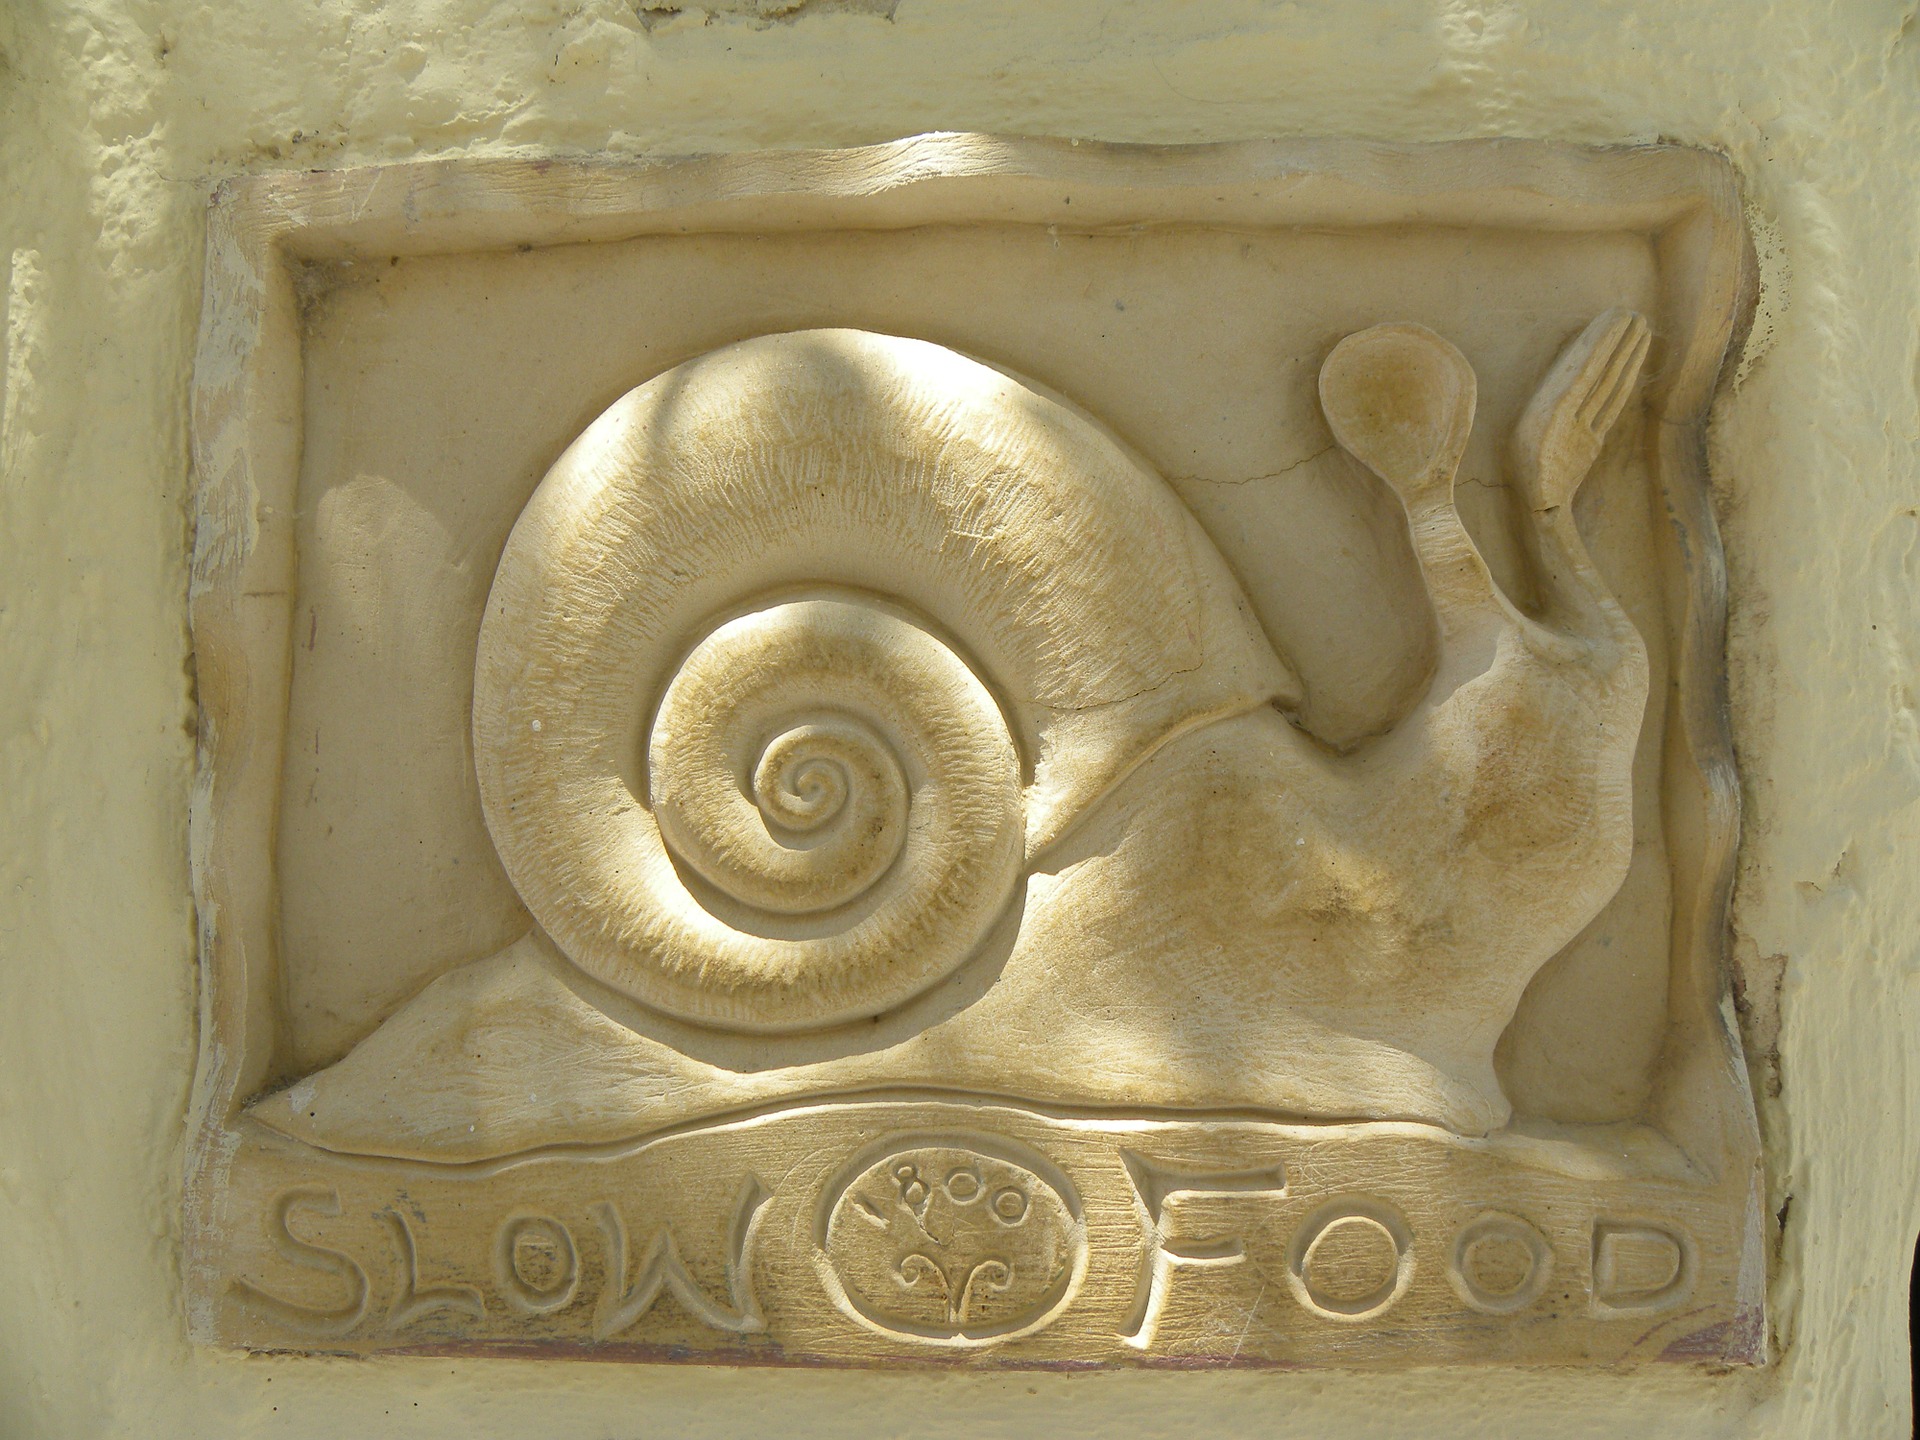 Snail image restaurant relief